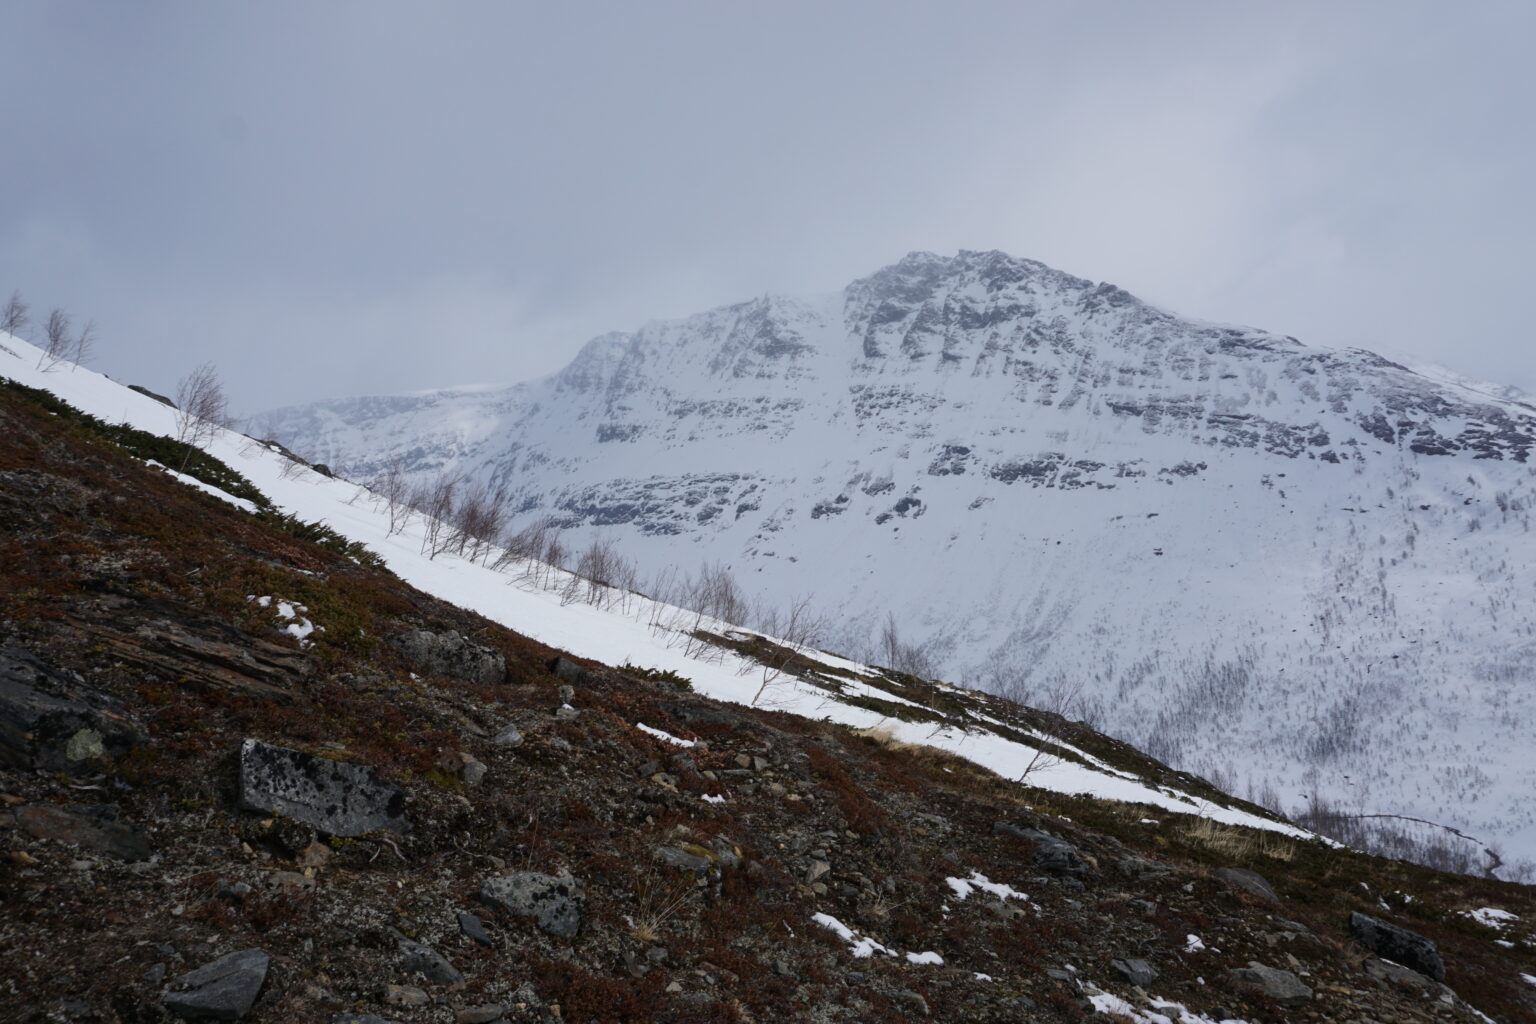 Looking at the ski terrain in the Vasseldalen backcountry